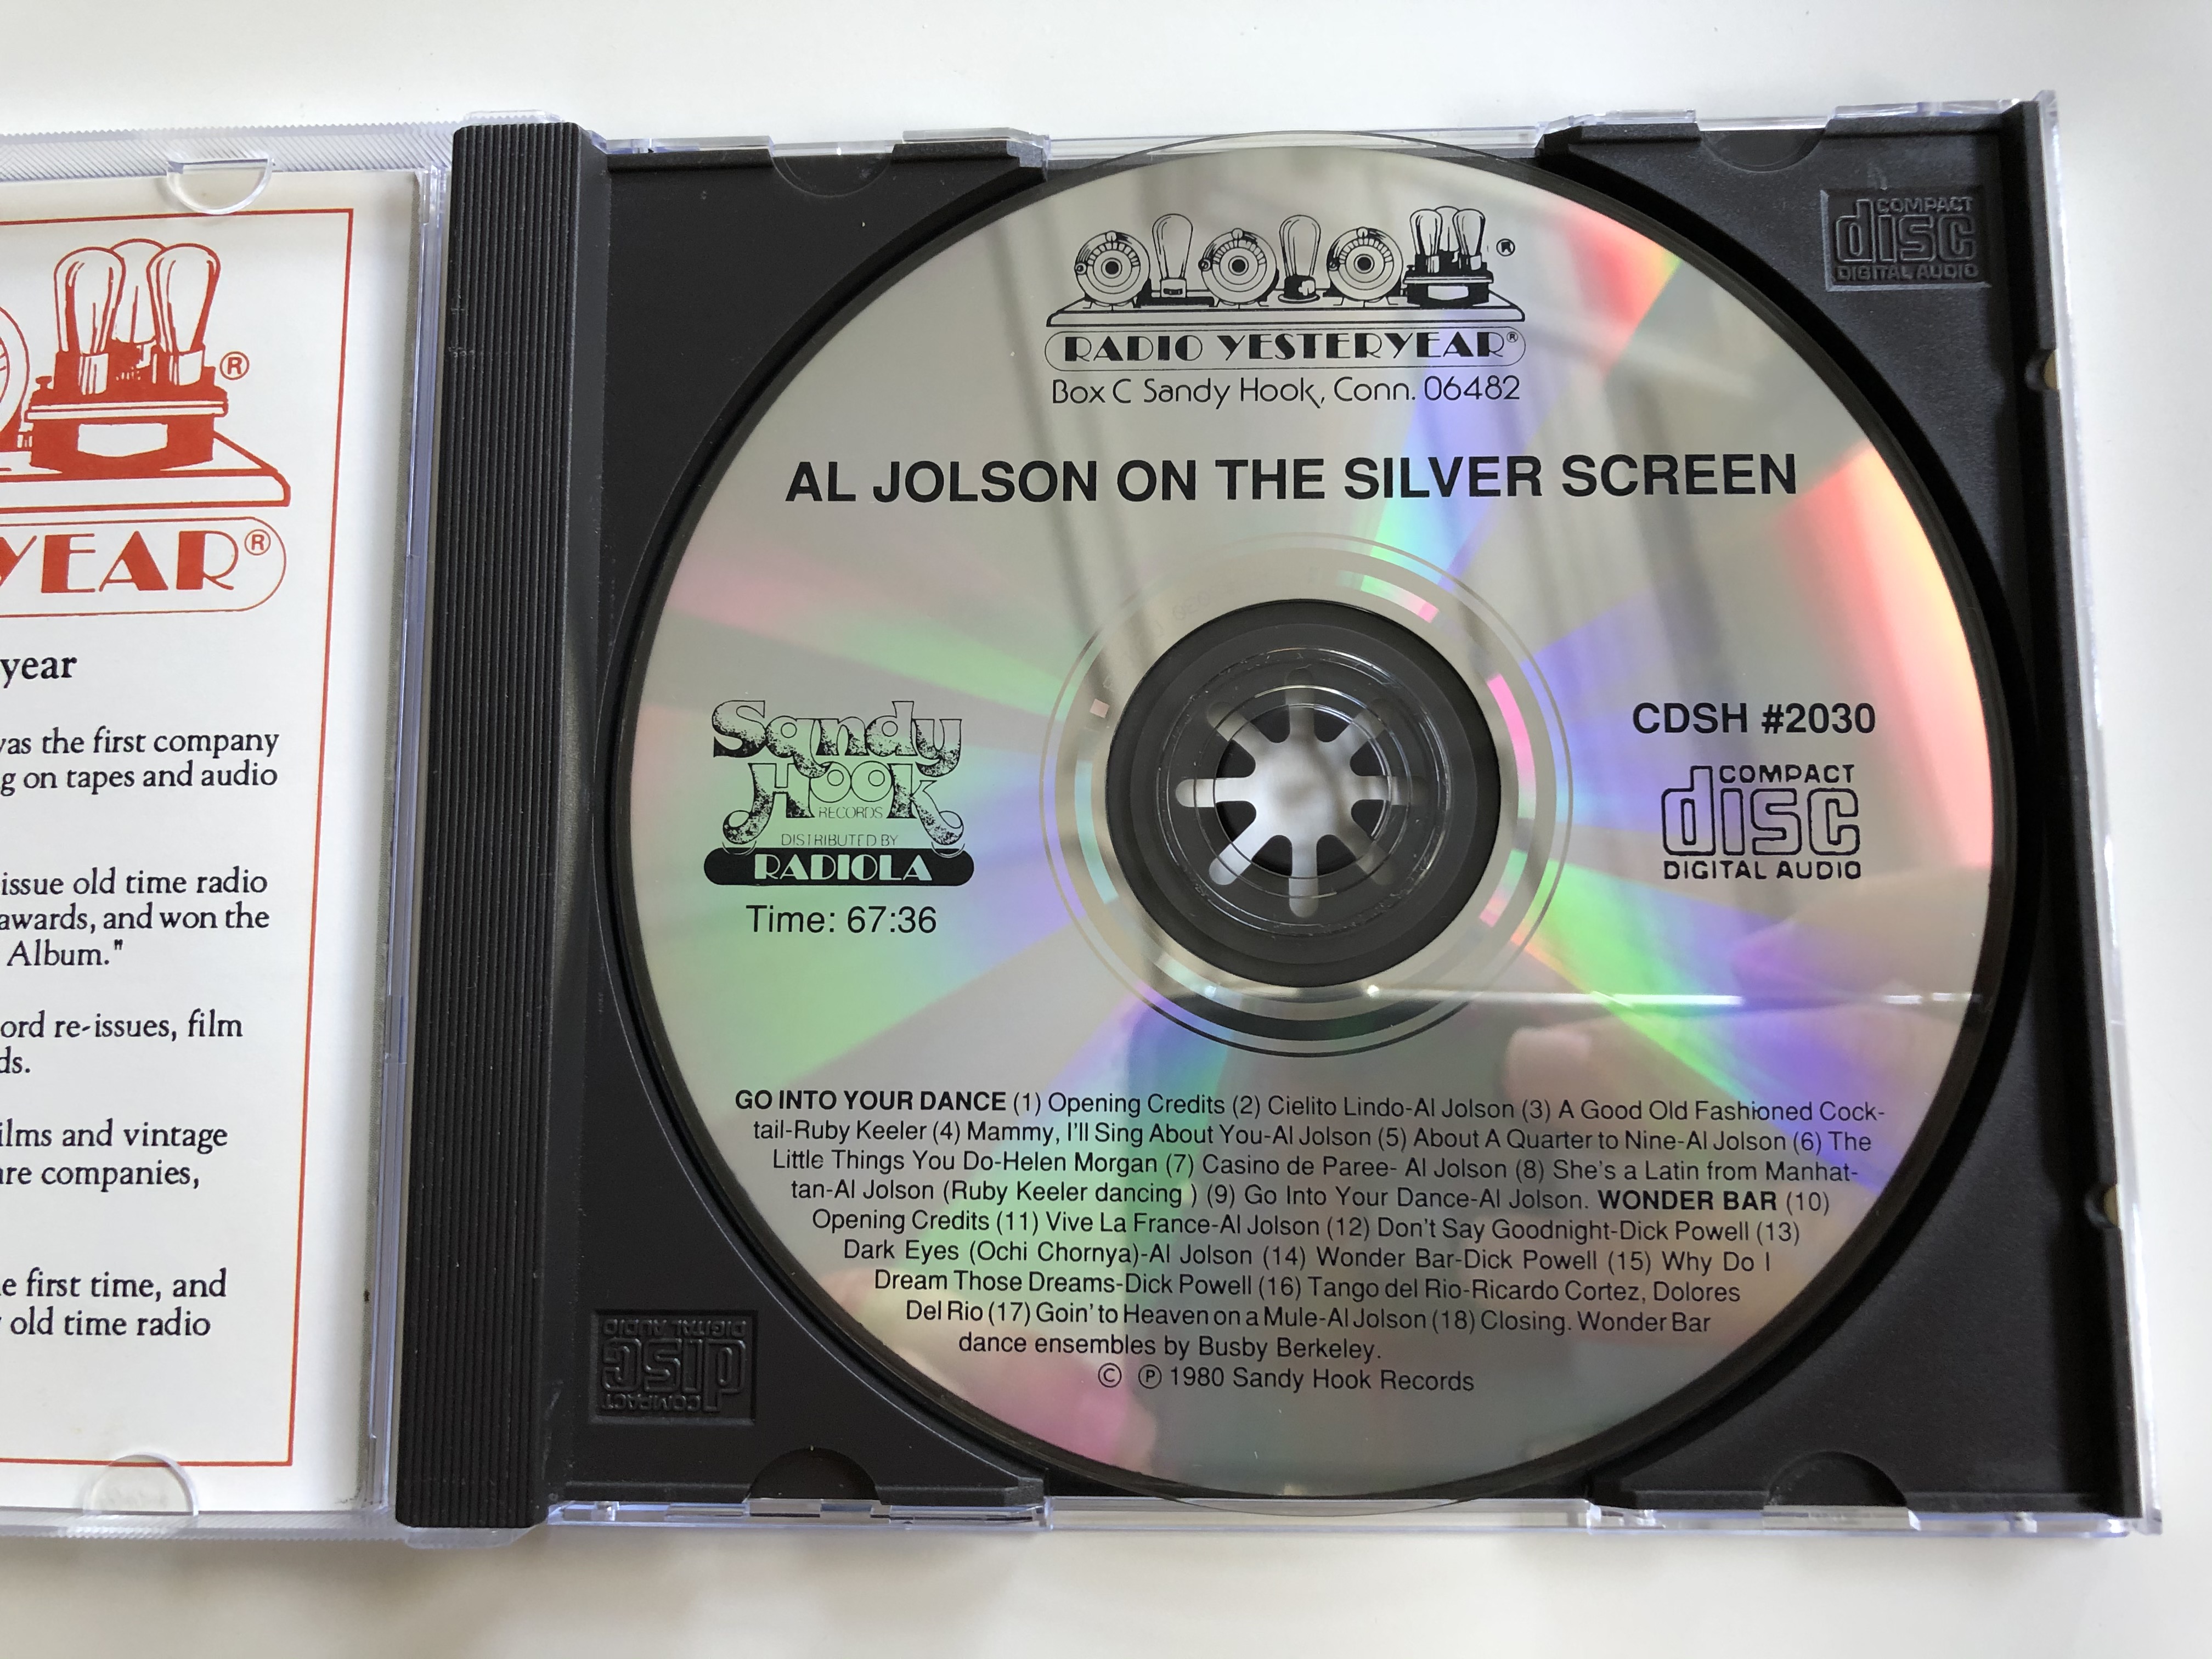 al-jolson-on-the-silver-screen-go-into-your-dance-wonder-bar-original-soundtrack-recordings-sandy-hook-records-audio-cd-1980-cdsh-2030-4-.jpg